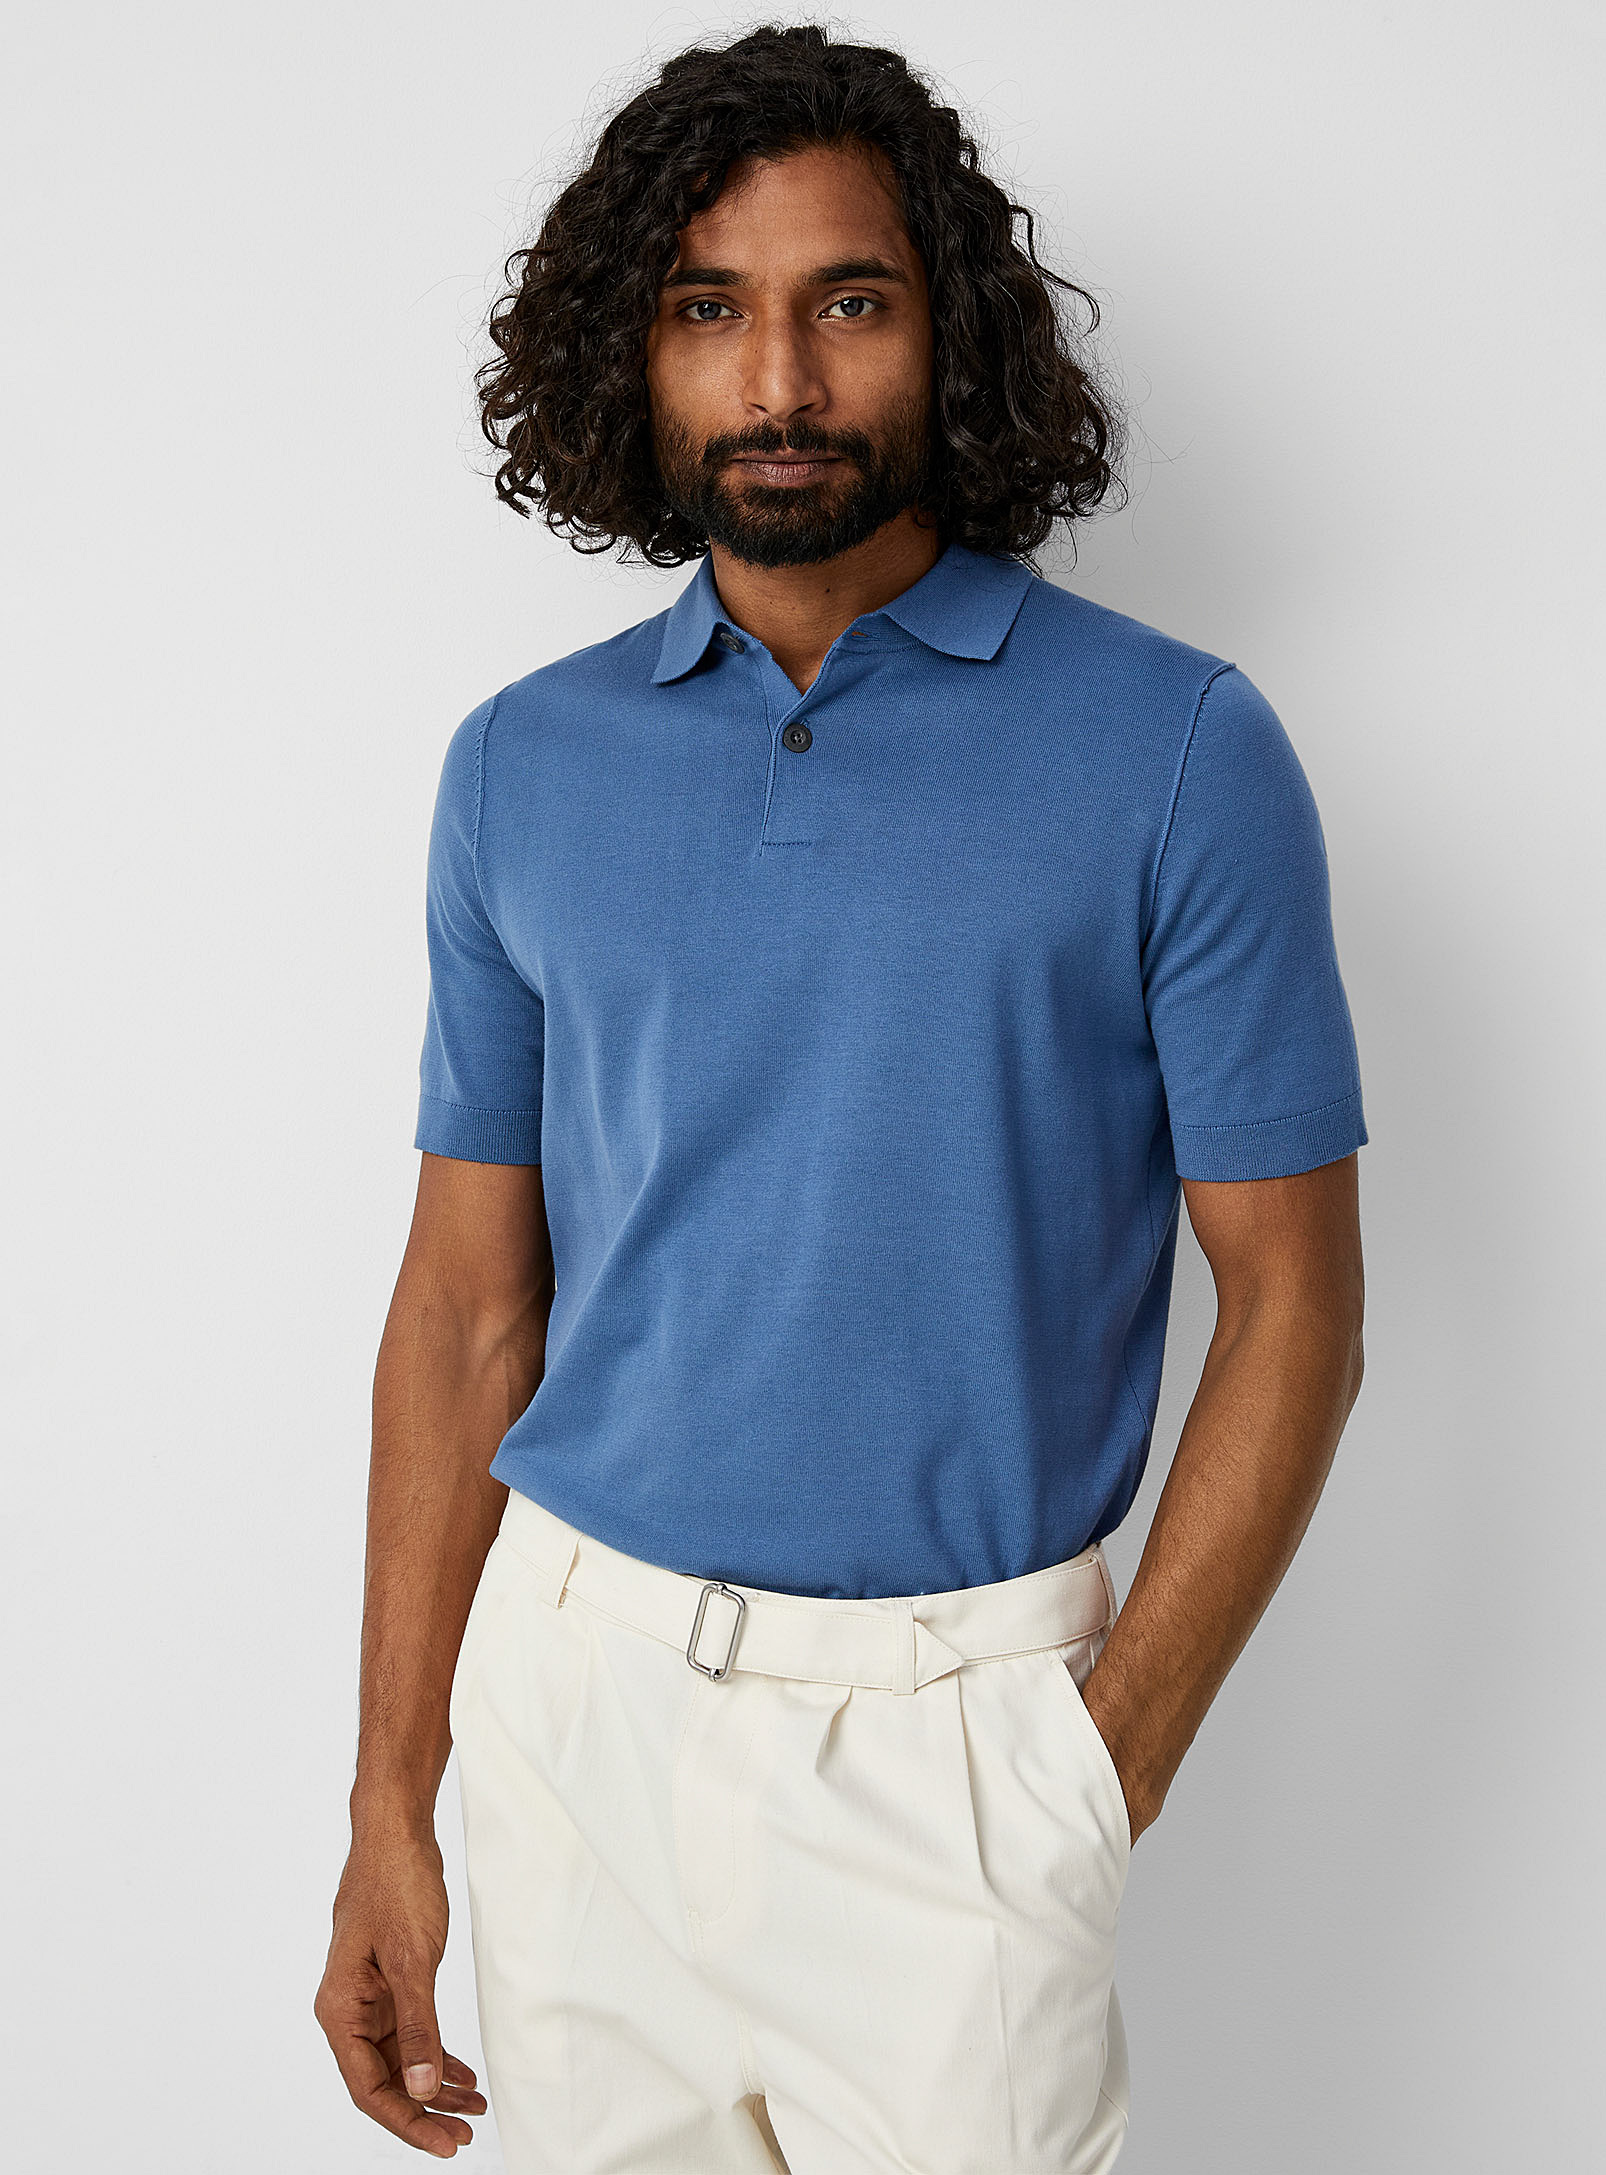 Marc O'Polo Shirt - Men's Minimalist fine-knit Polo